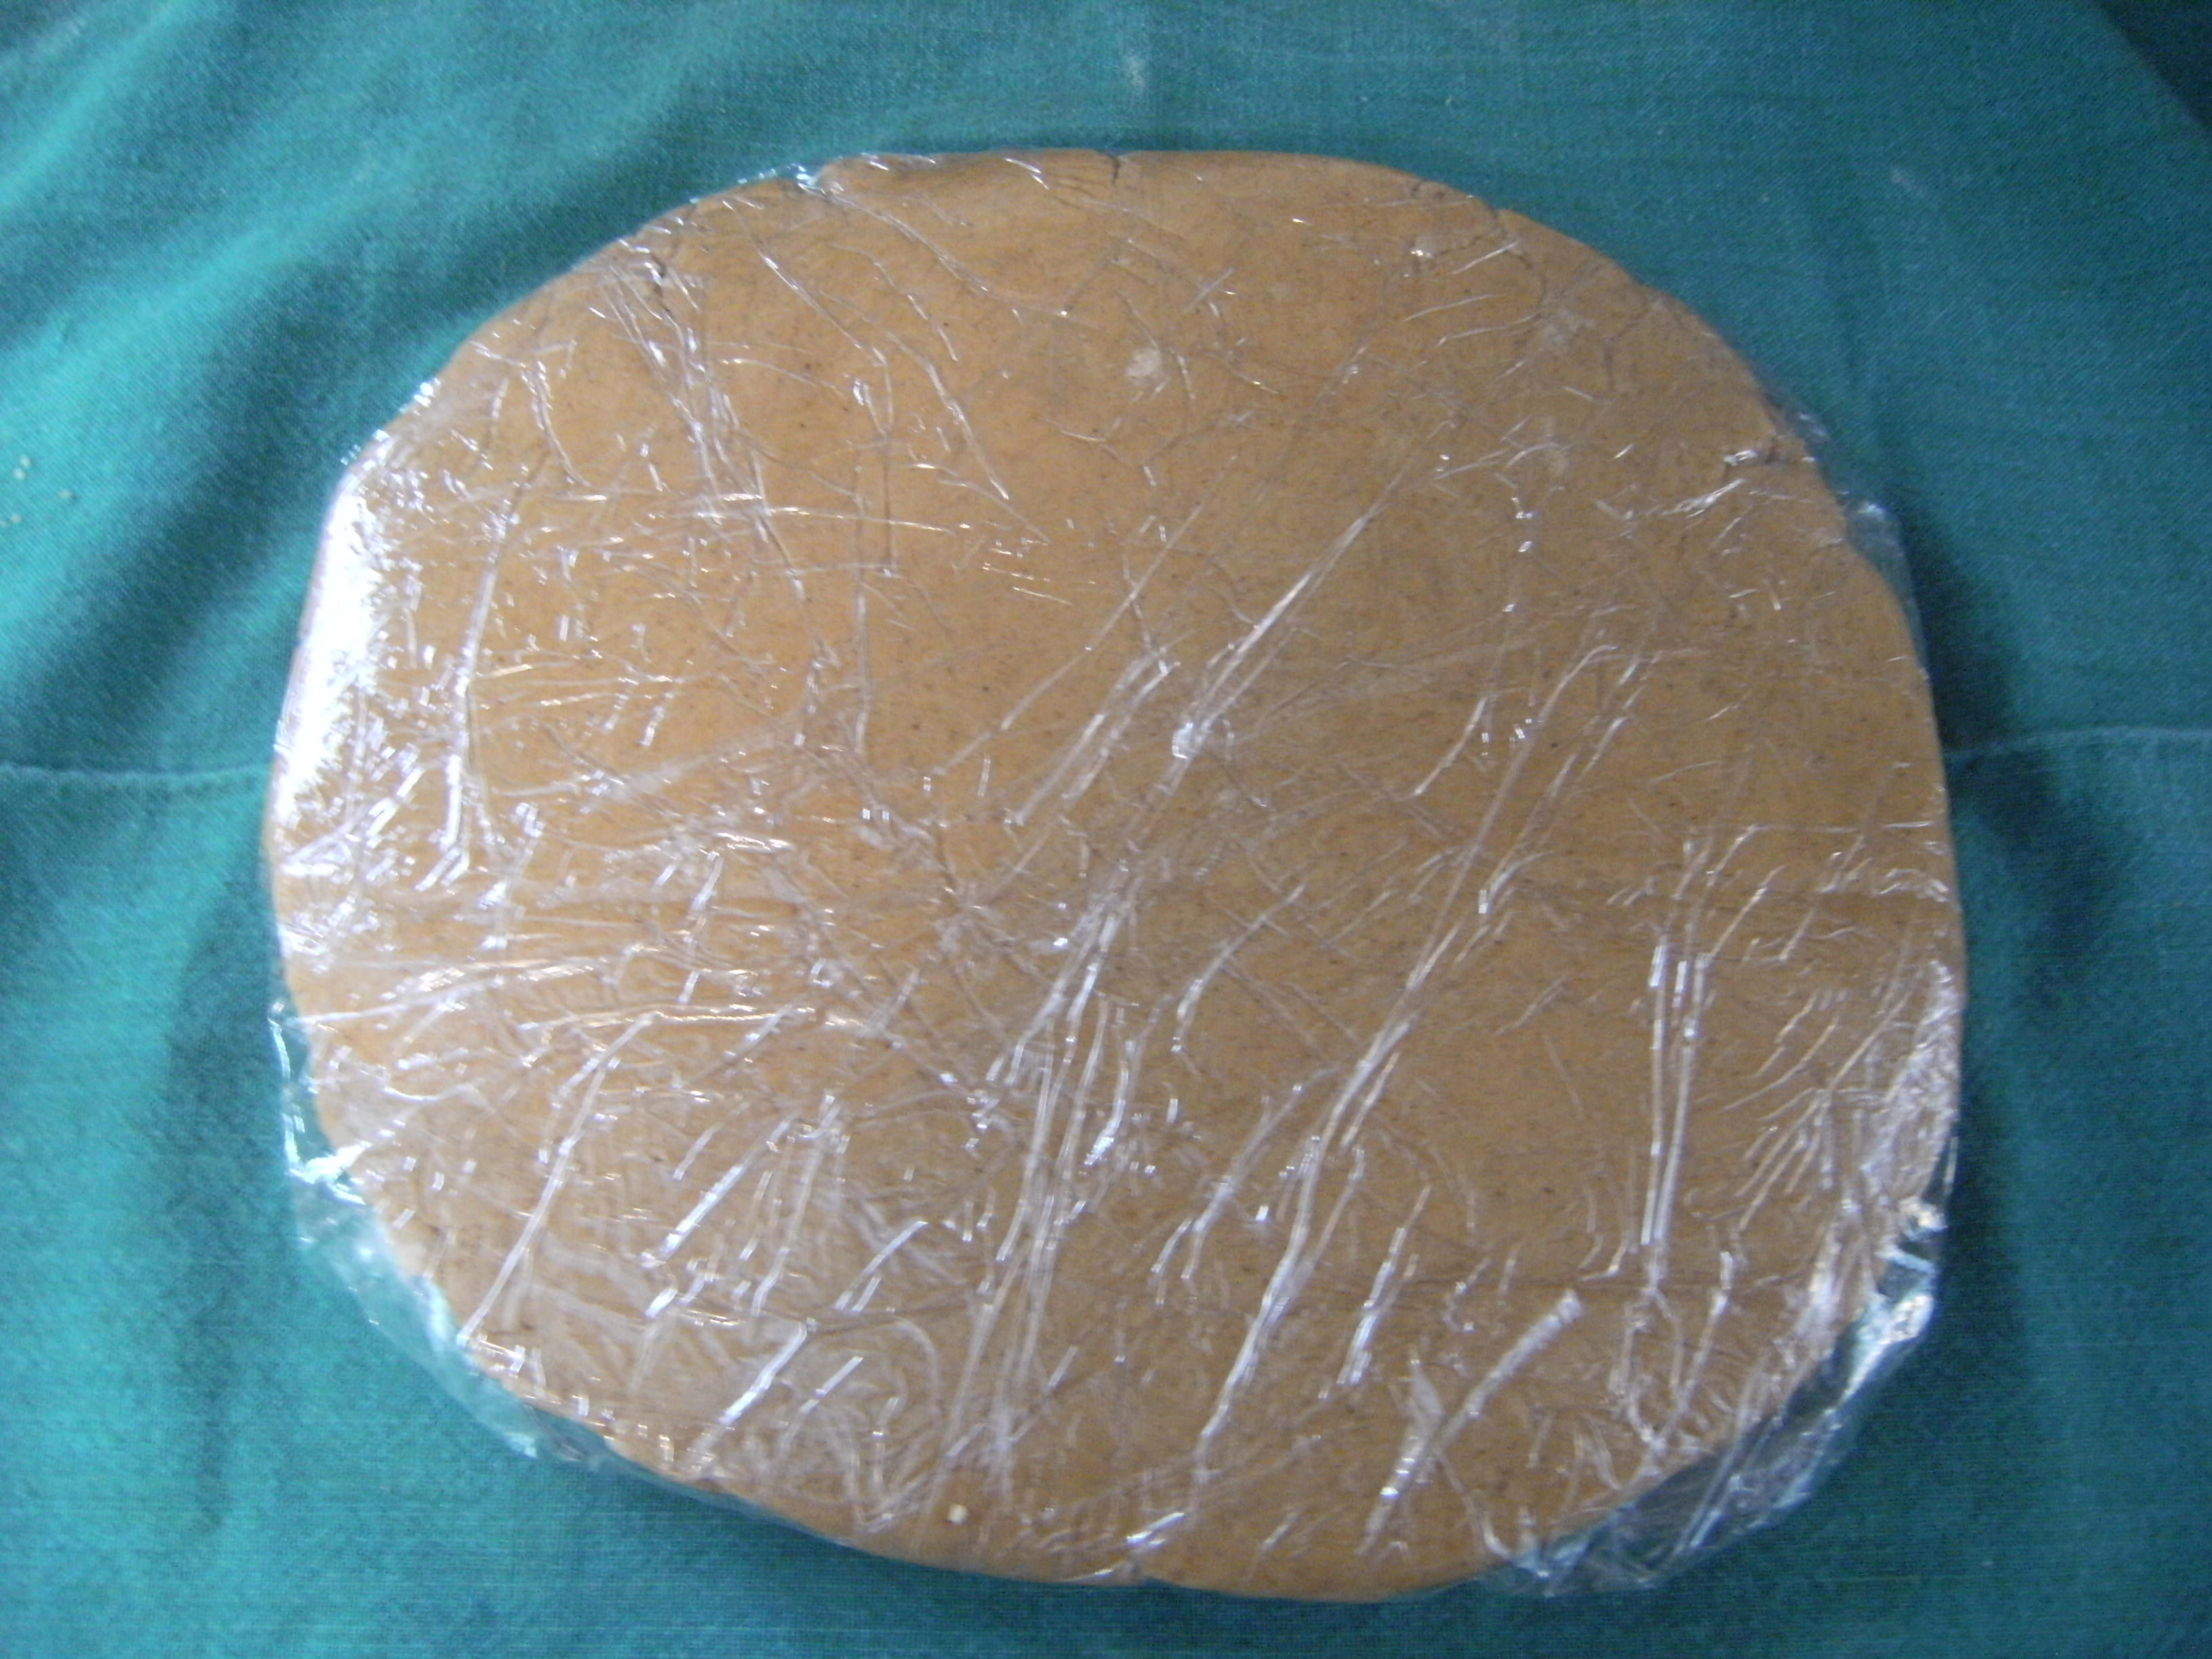 A disc of pfeffernusse cookie dough